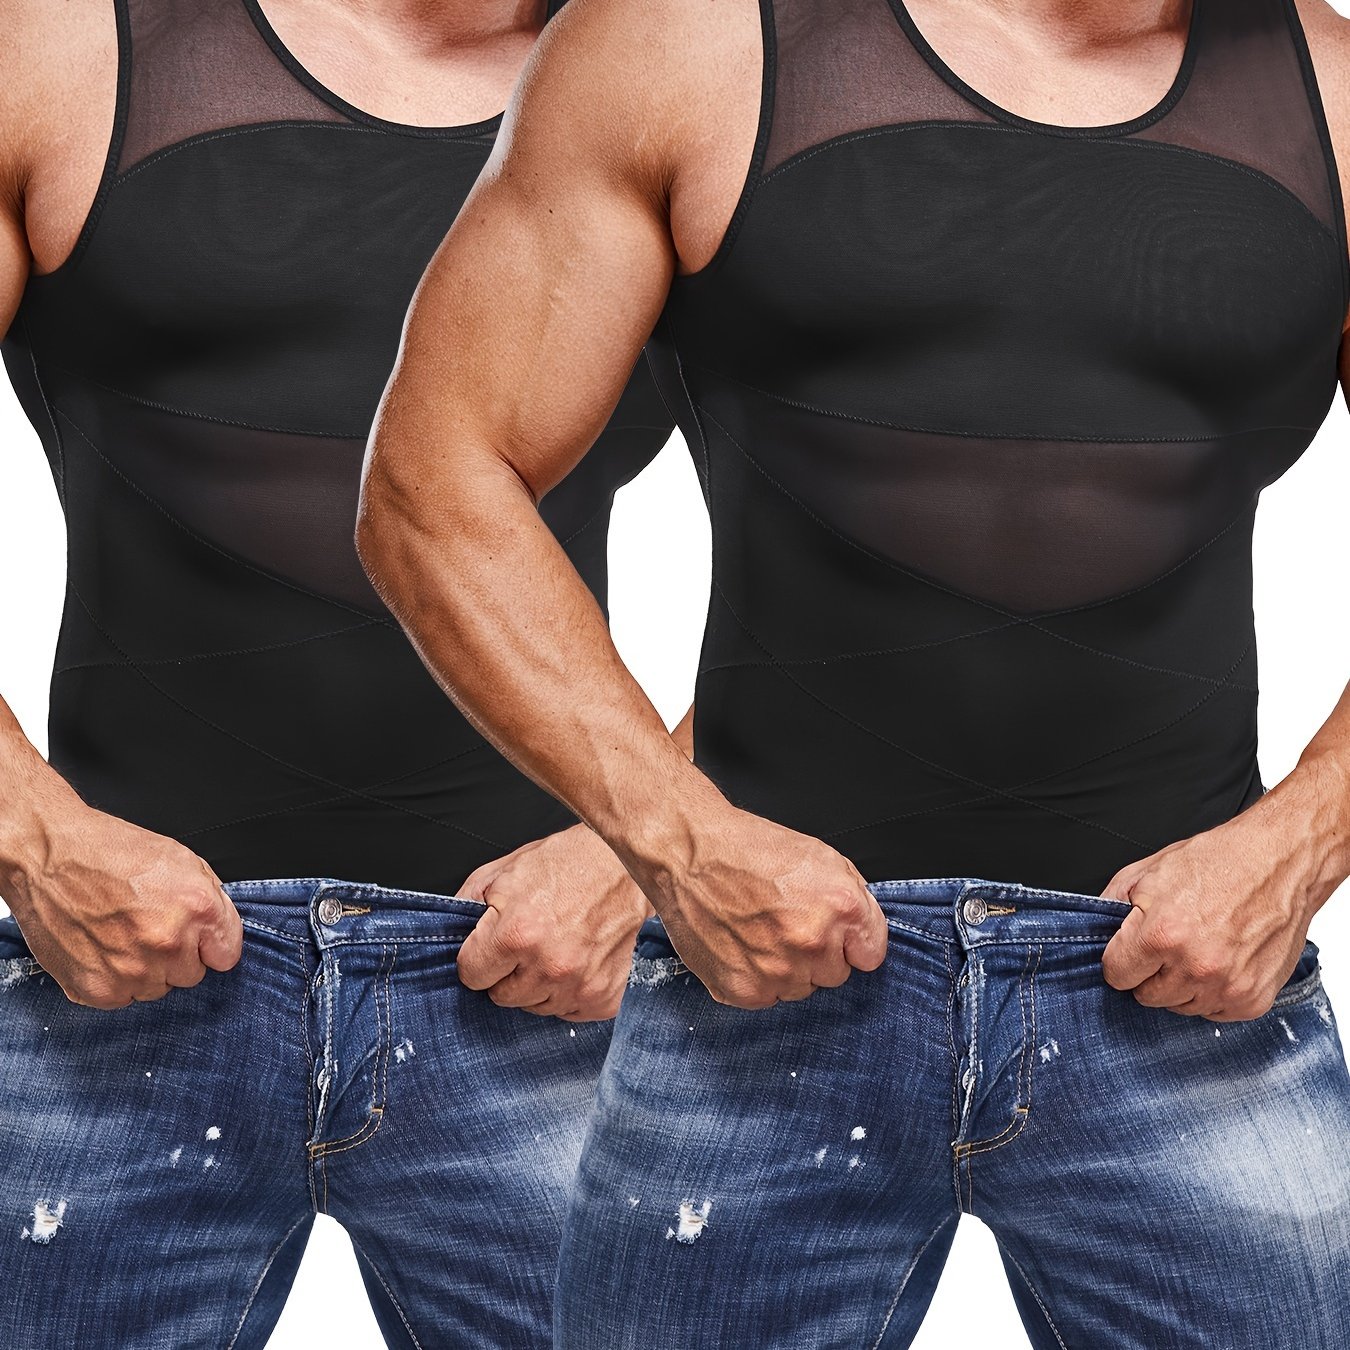 Gotoly Men Compression Shirt Shapewear Slimming Body Shaper Vest Undershirt Tummy  Control Tank Top - ShopStyle